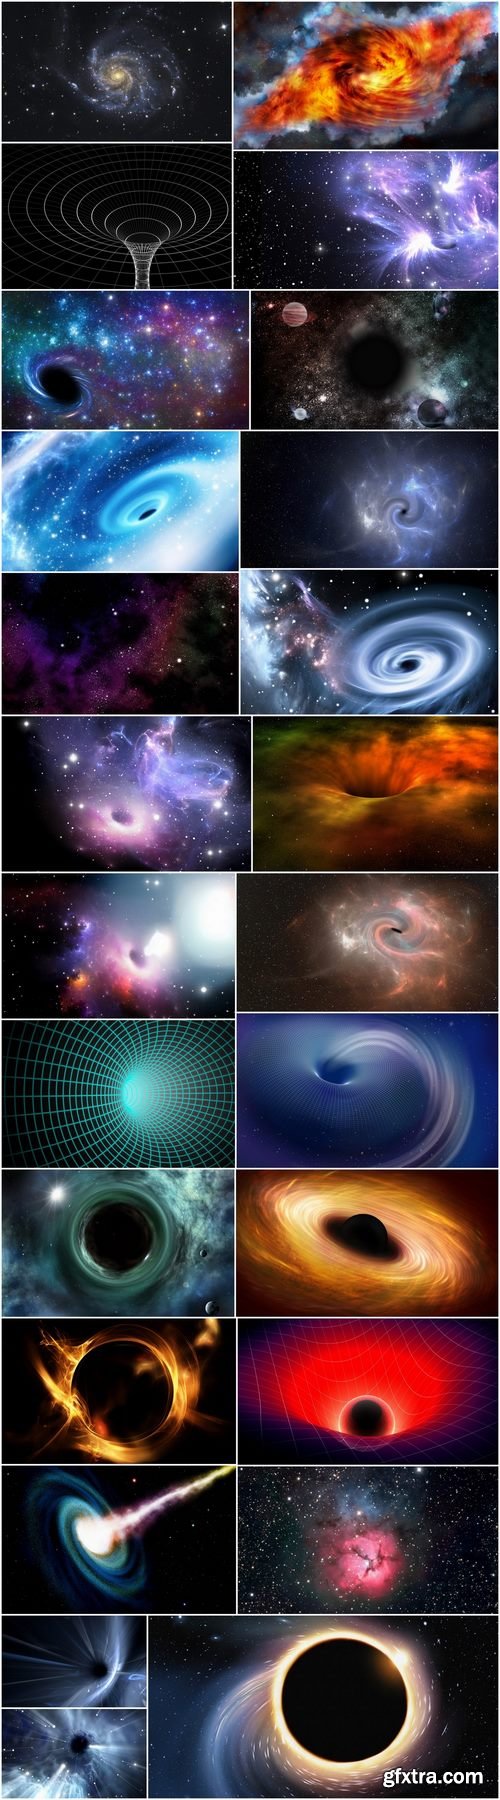 3d image black hole universe constellation spiral galaxy 25 HQ Jpeg